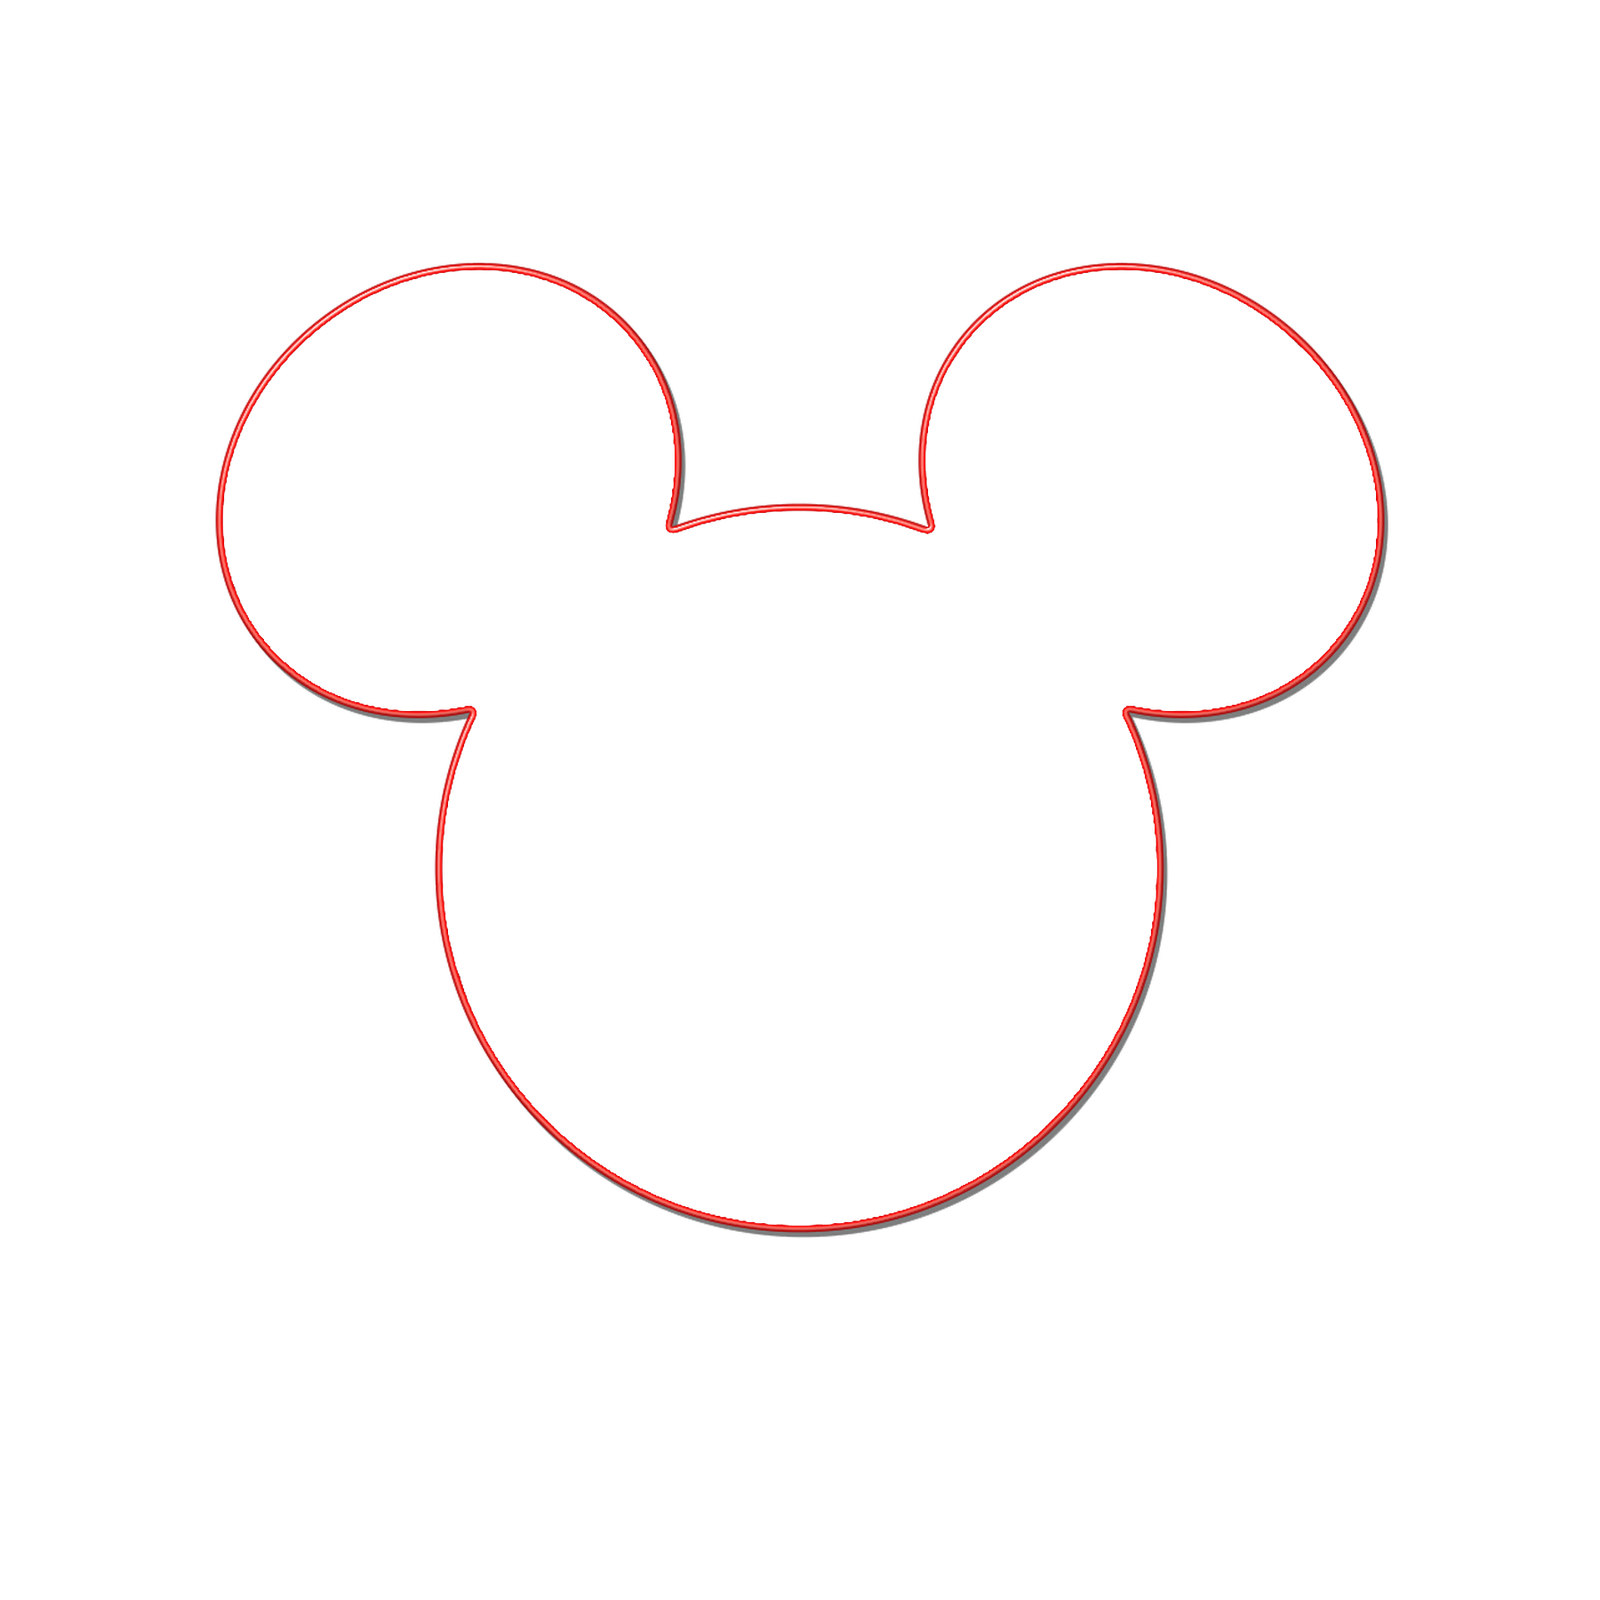  - Mickey Mouse Ears Clip Art